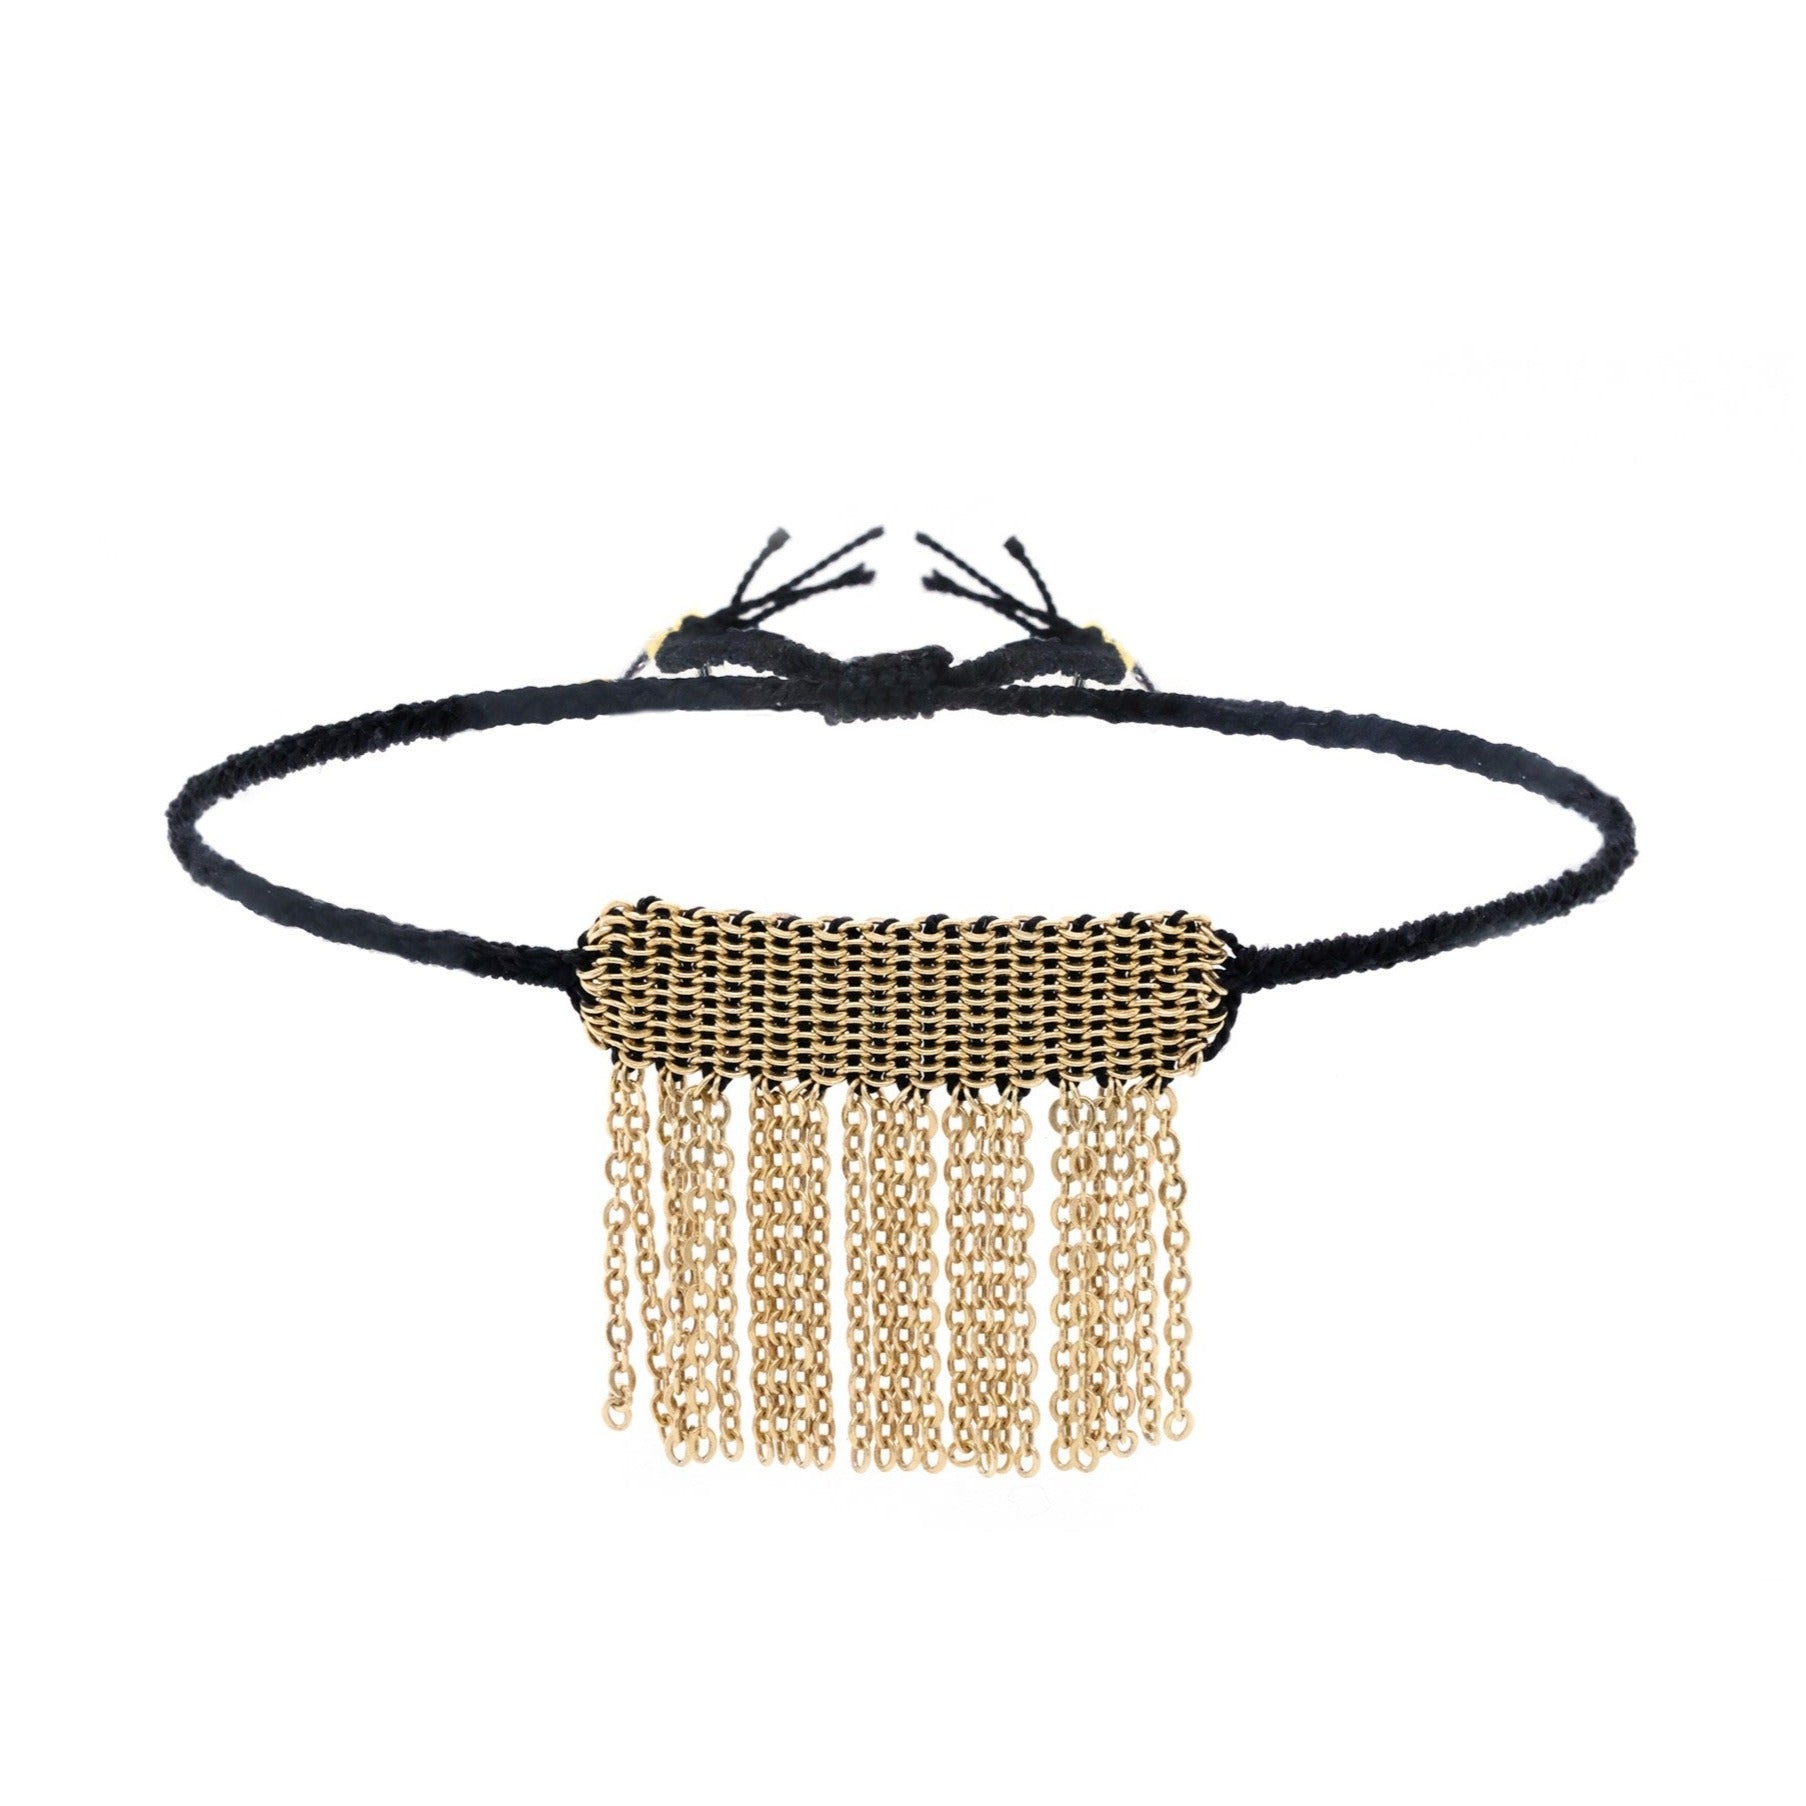 Black Silk Bracelet with Gold Vermeil Center Tassel Section - Peridot Fine Jewelry - Marie Laure Chamorel